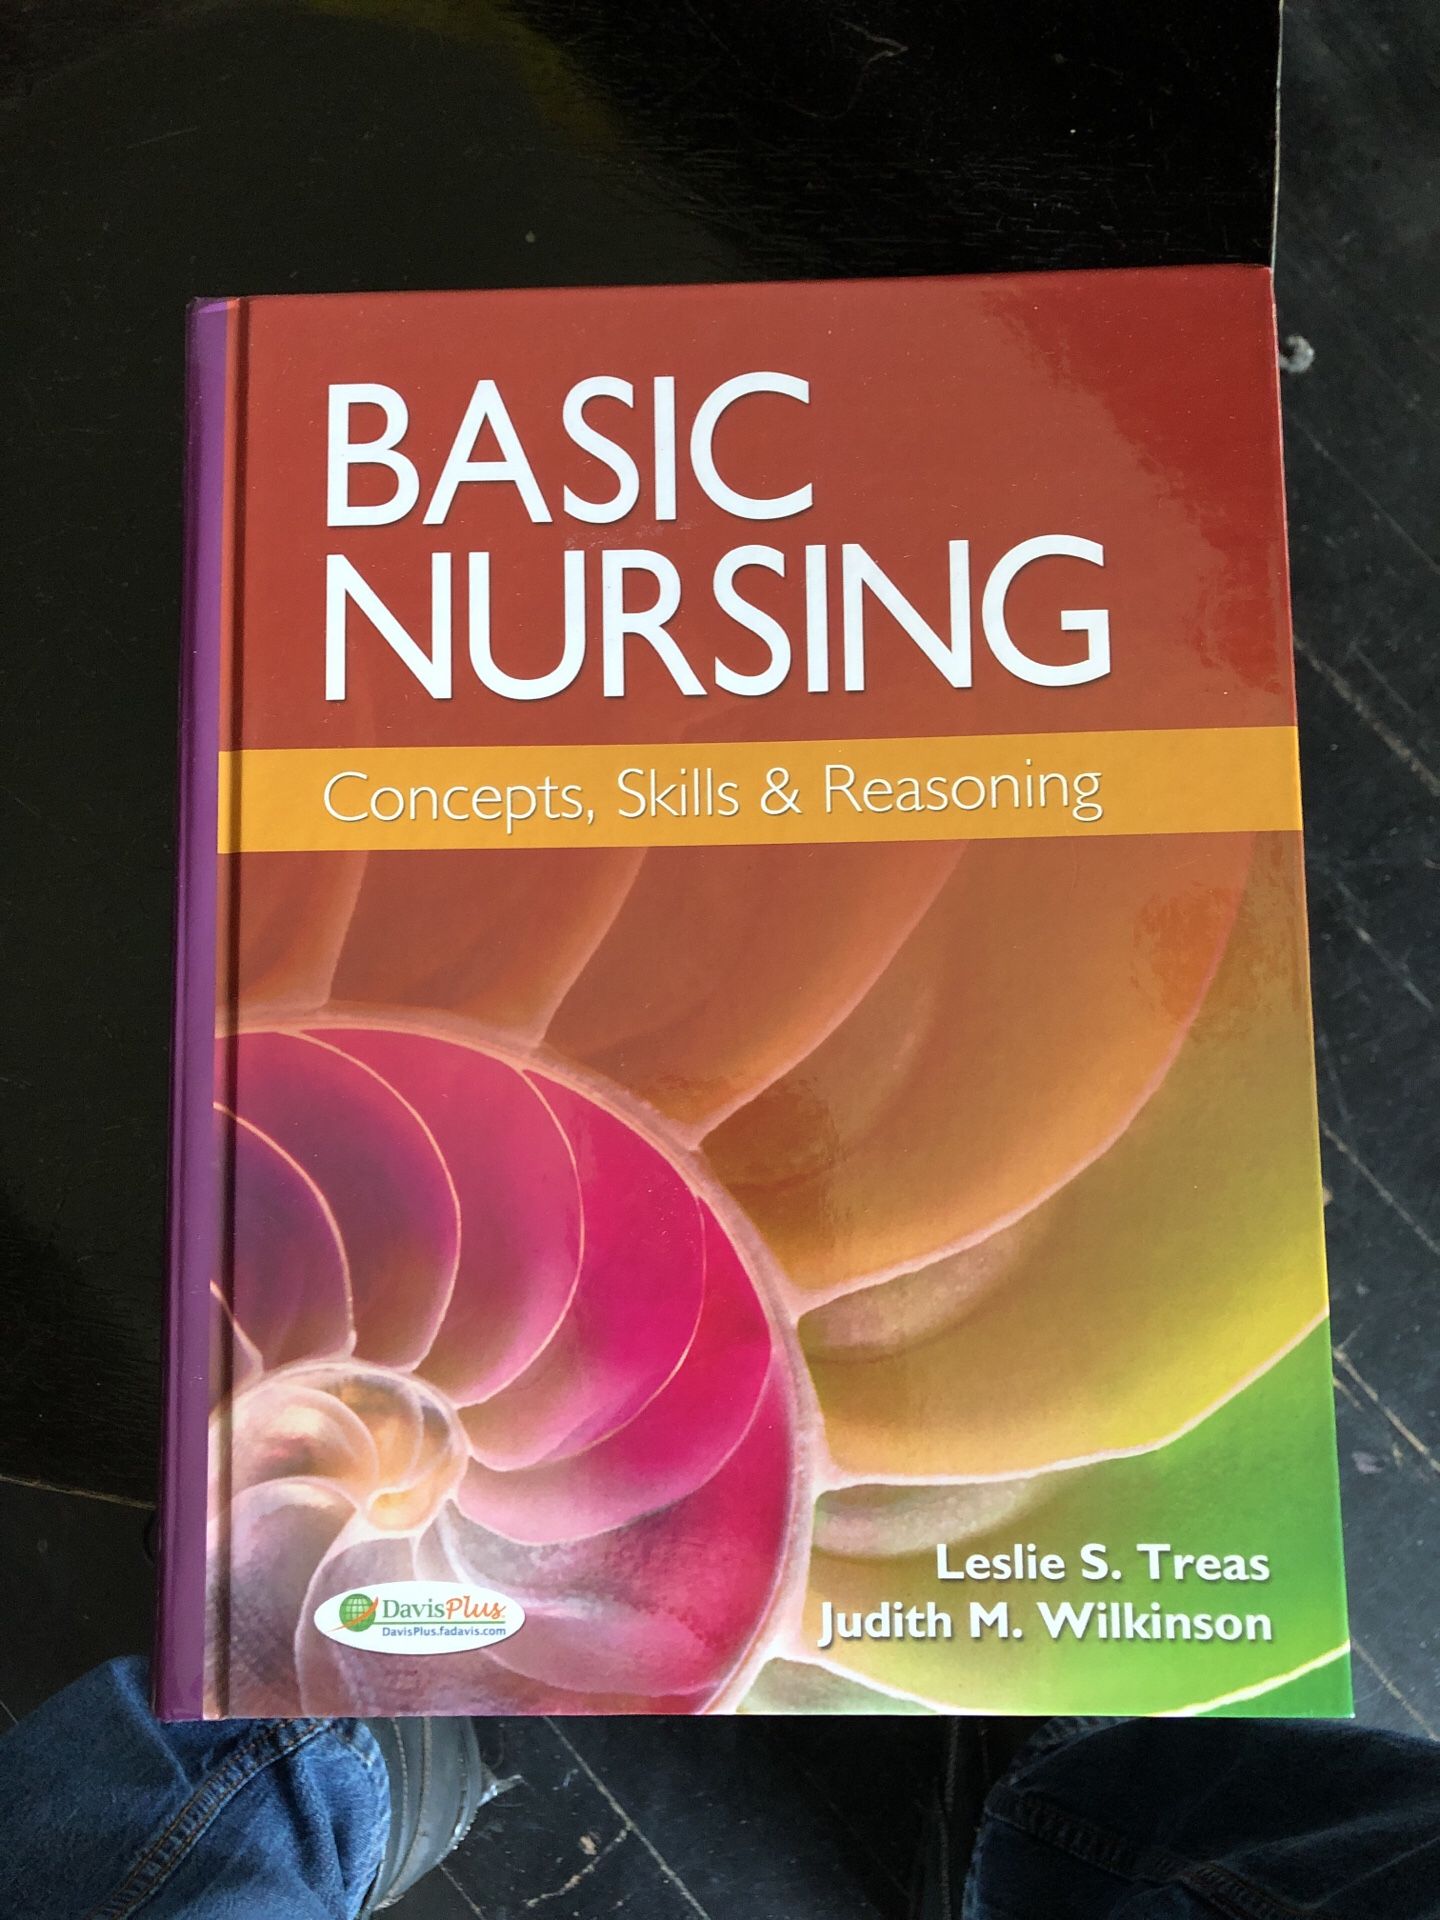 Basic nursing: concepts skills and reasoning (F.A. Davis)